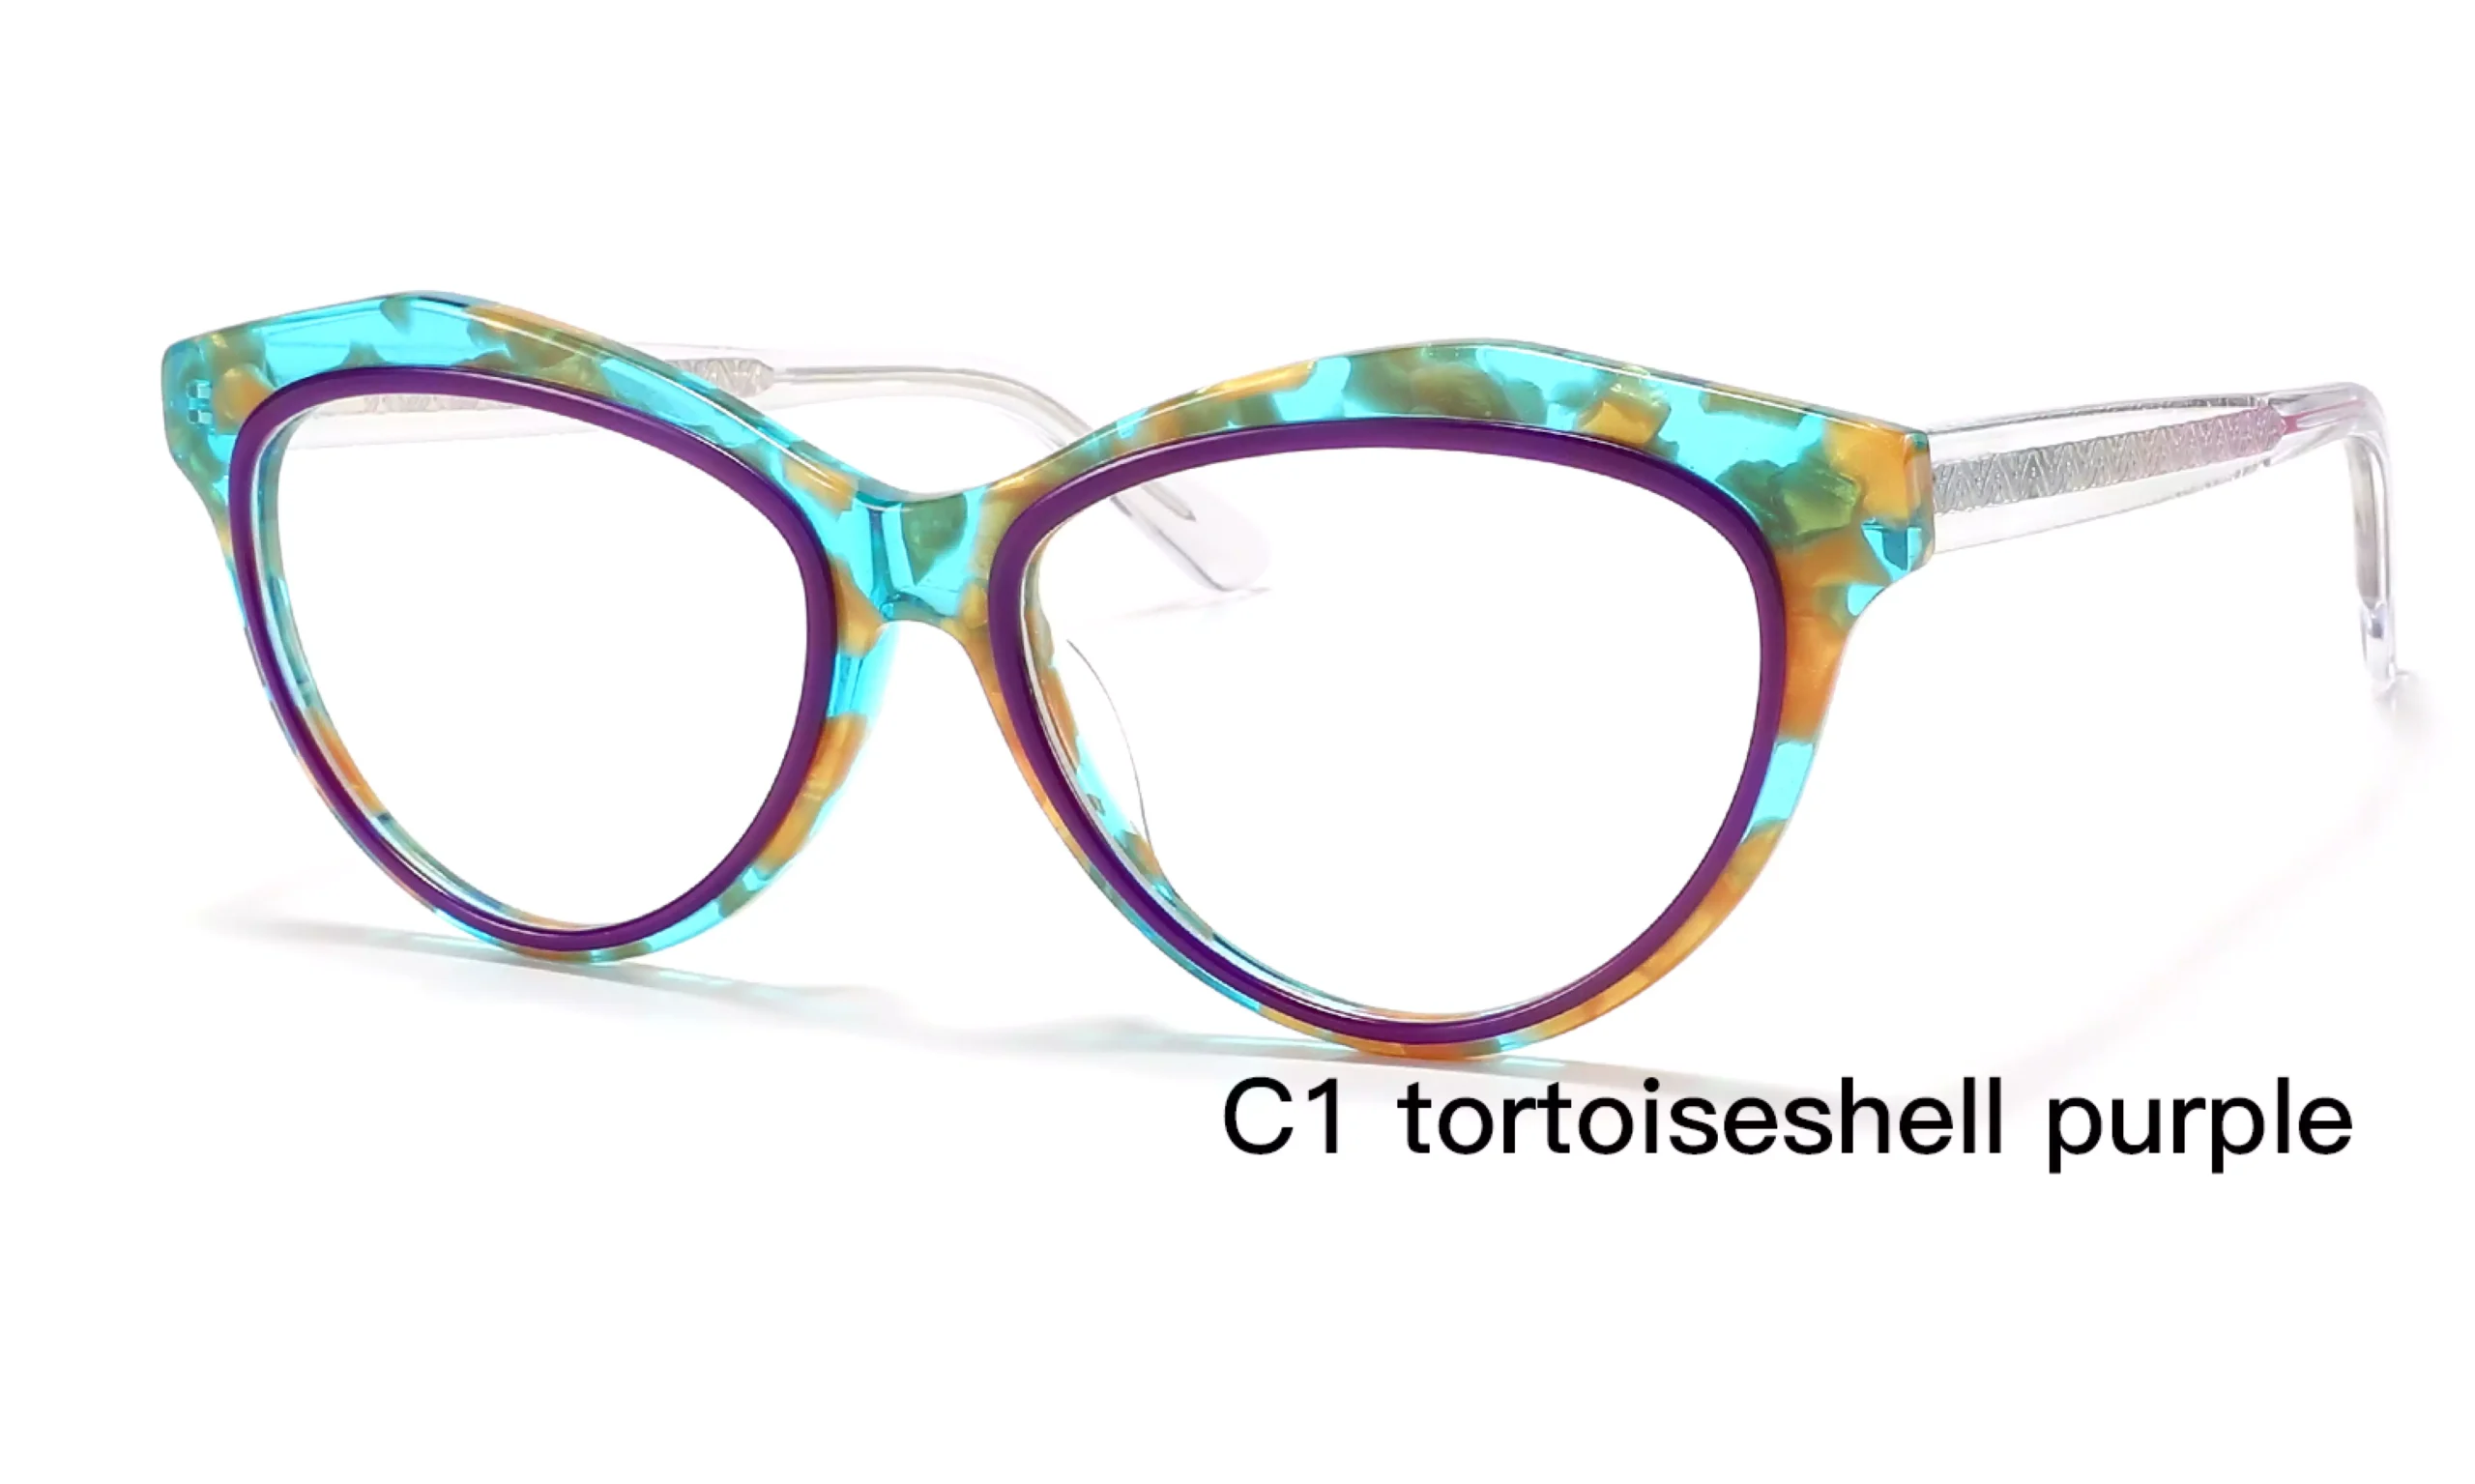 Wholesale, Cat Eye Frames, For Prescription Glasses, Tortoiseshell Purple, Gradient Temple, 45 Degree Display